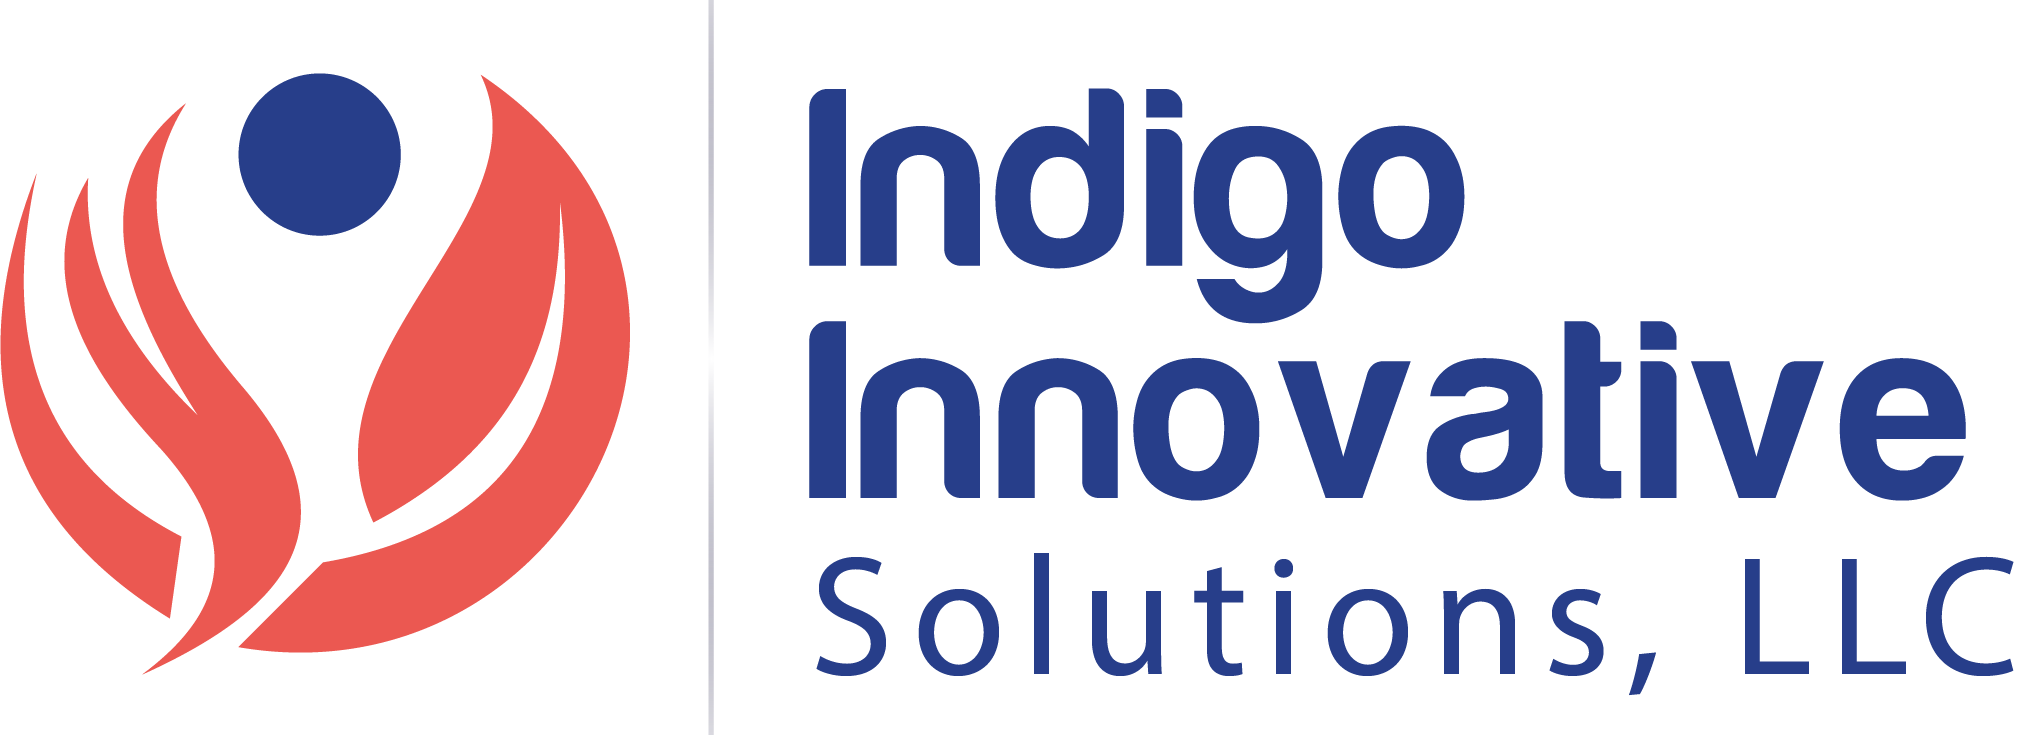 Indigo Innovative Solutions